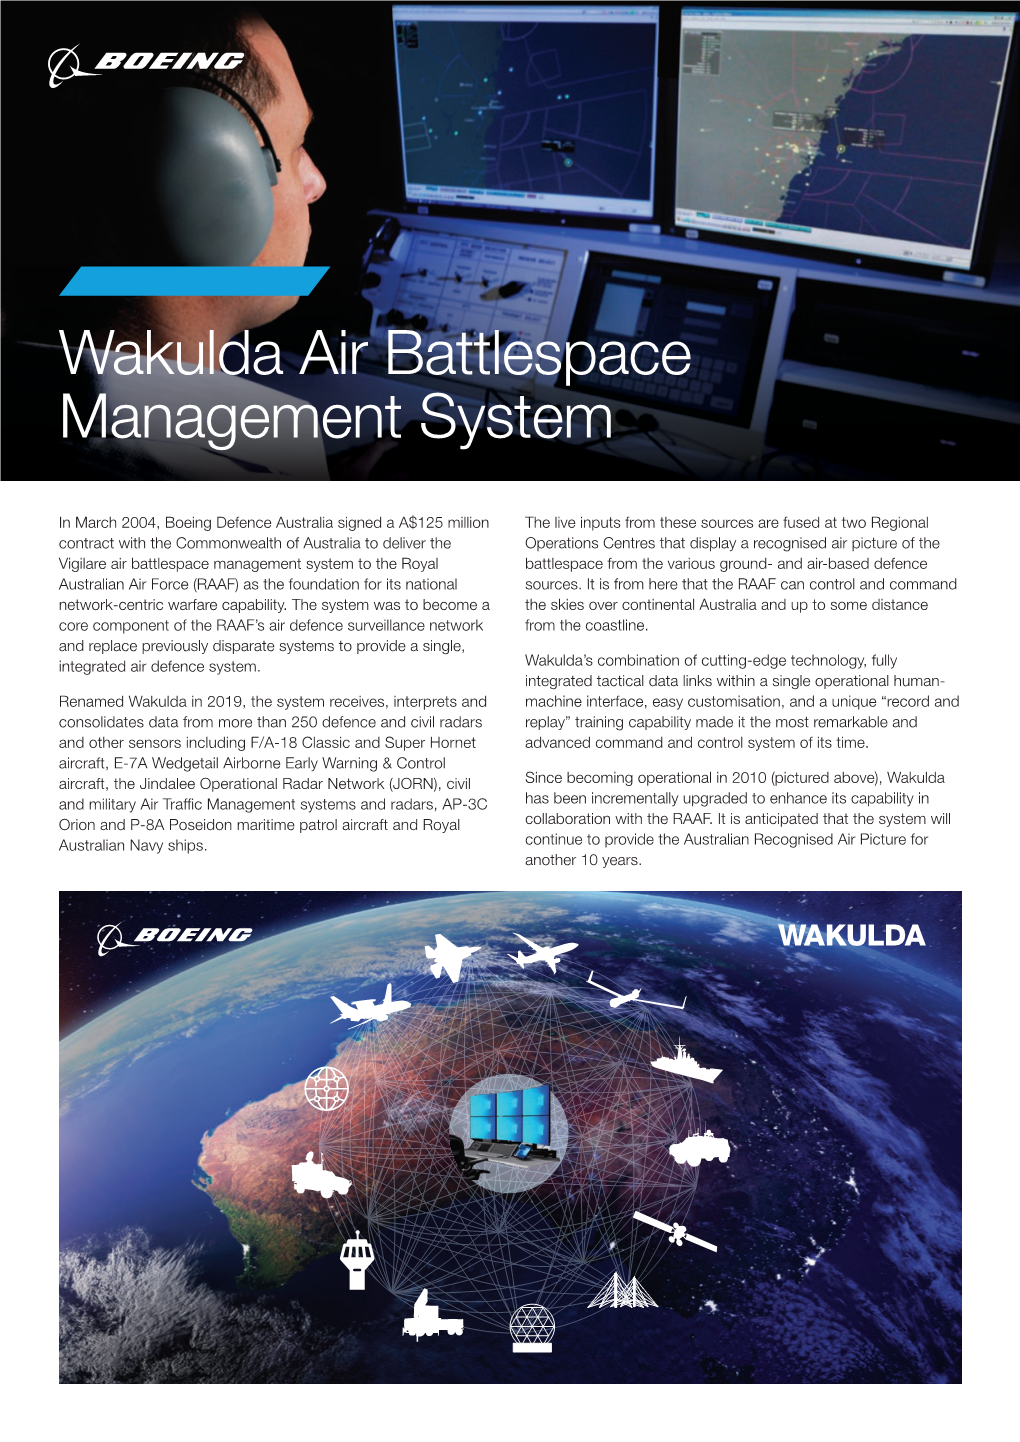 Wakulda Air Battlespace Management System